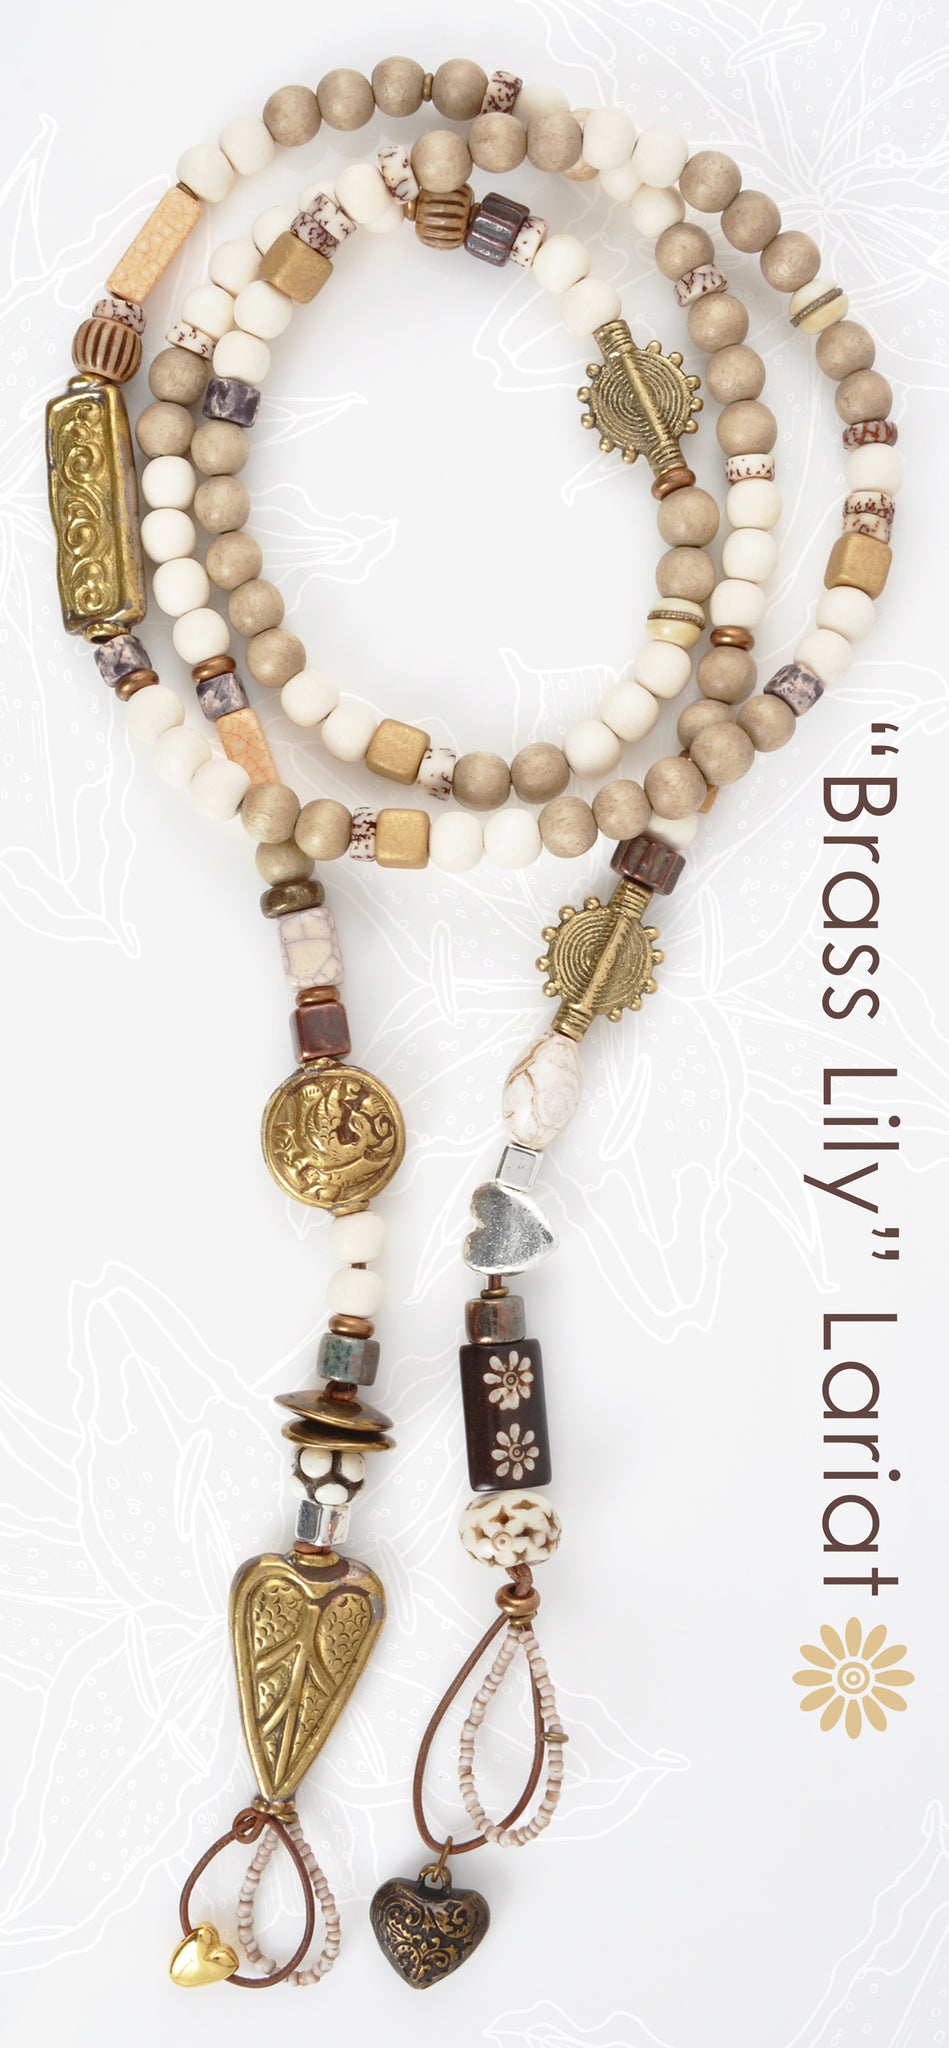 Brass Lily Lariat Blog Tamara Scott Designs